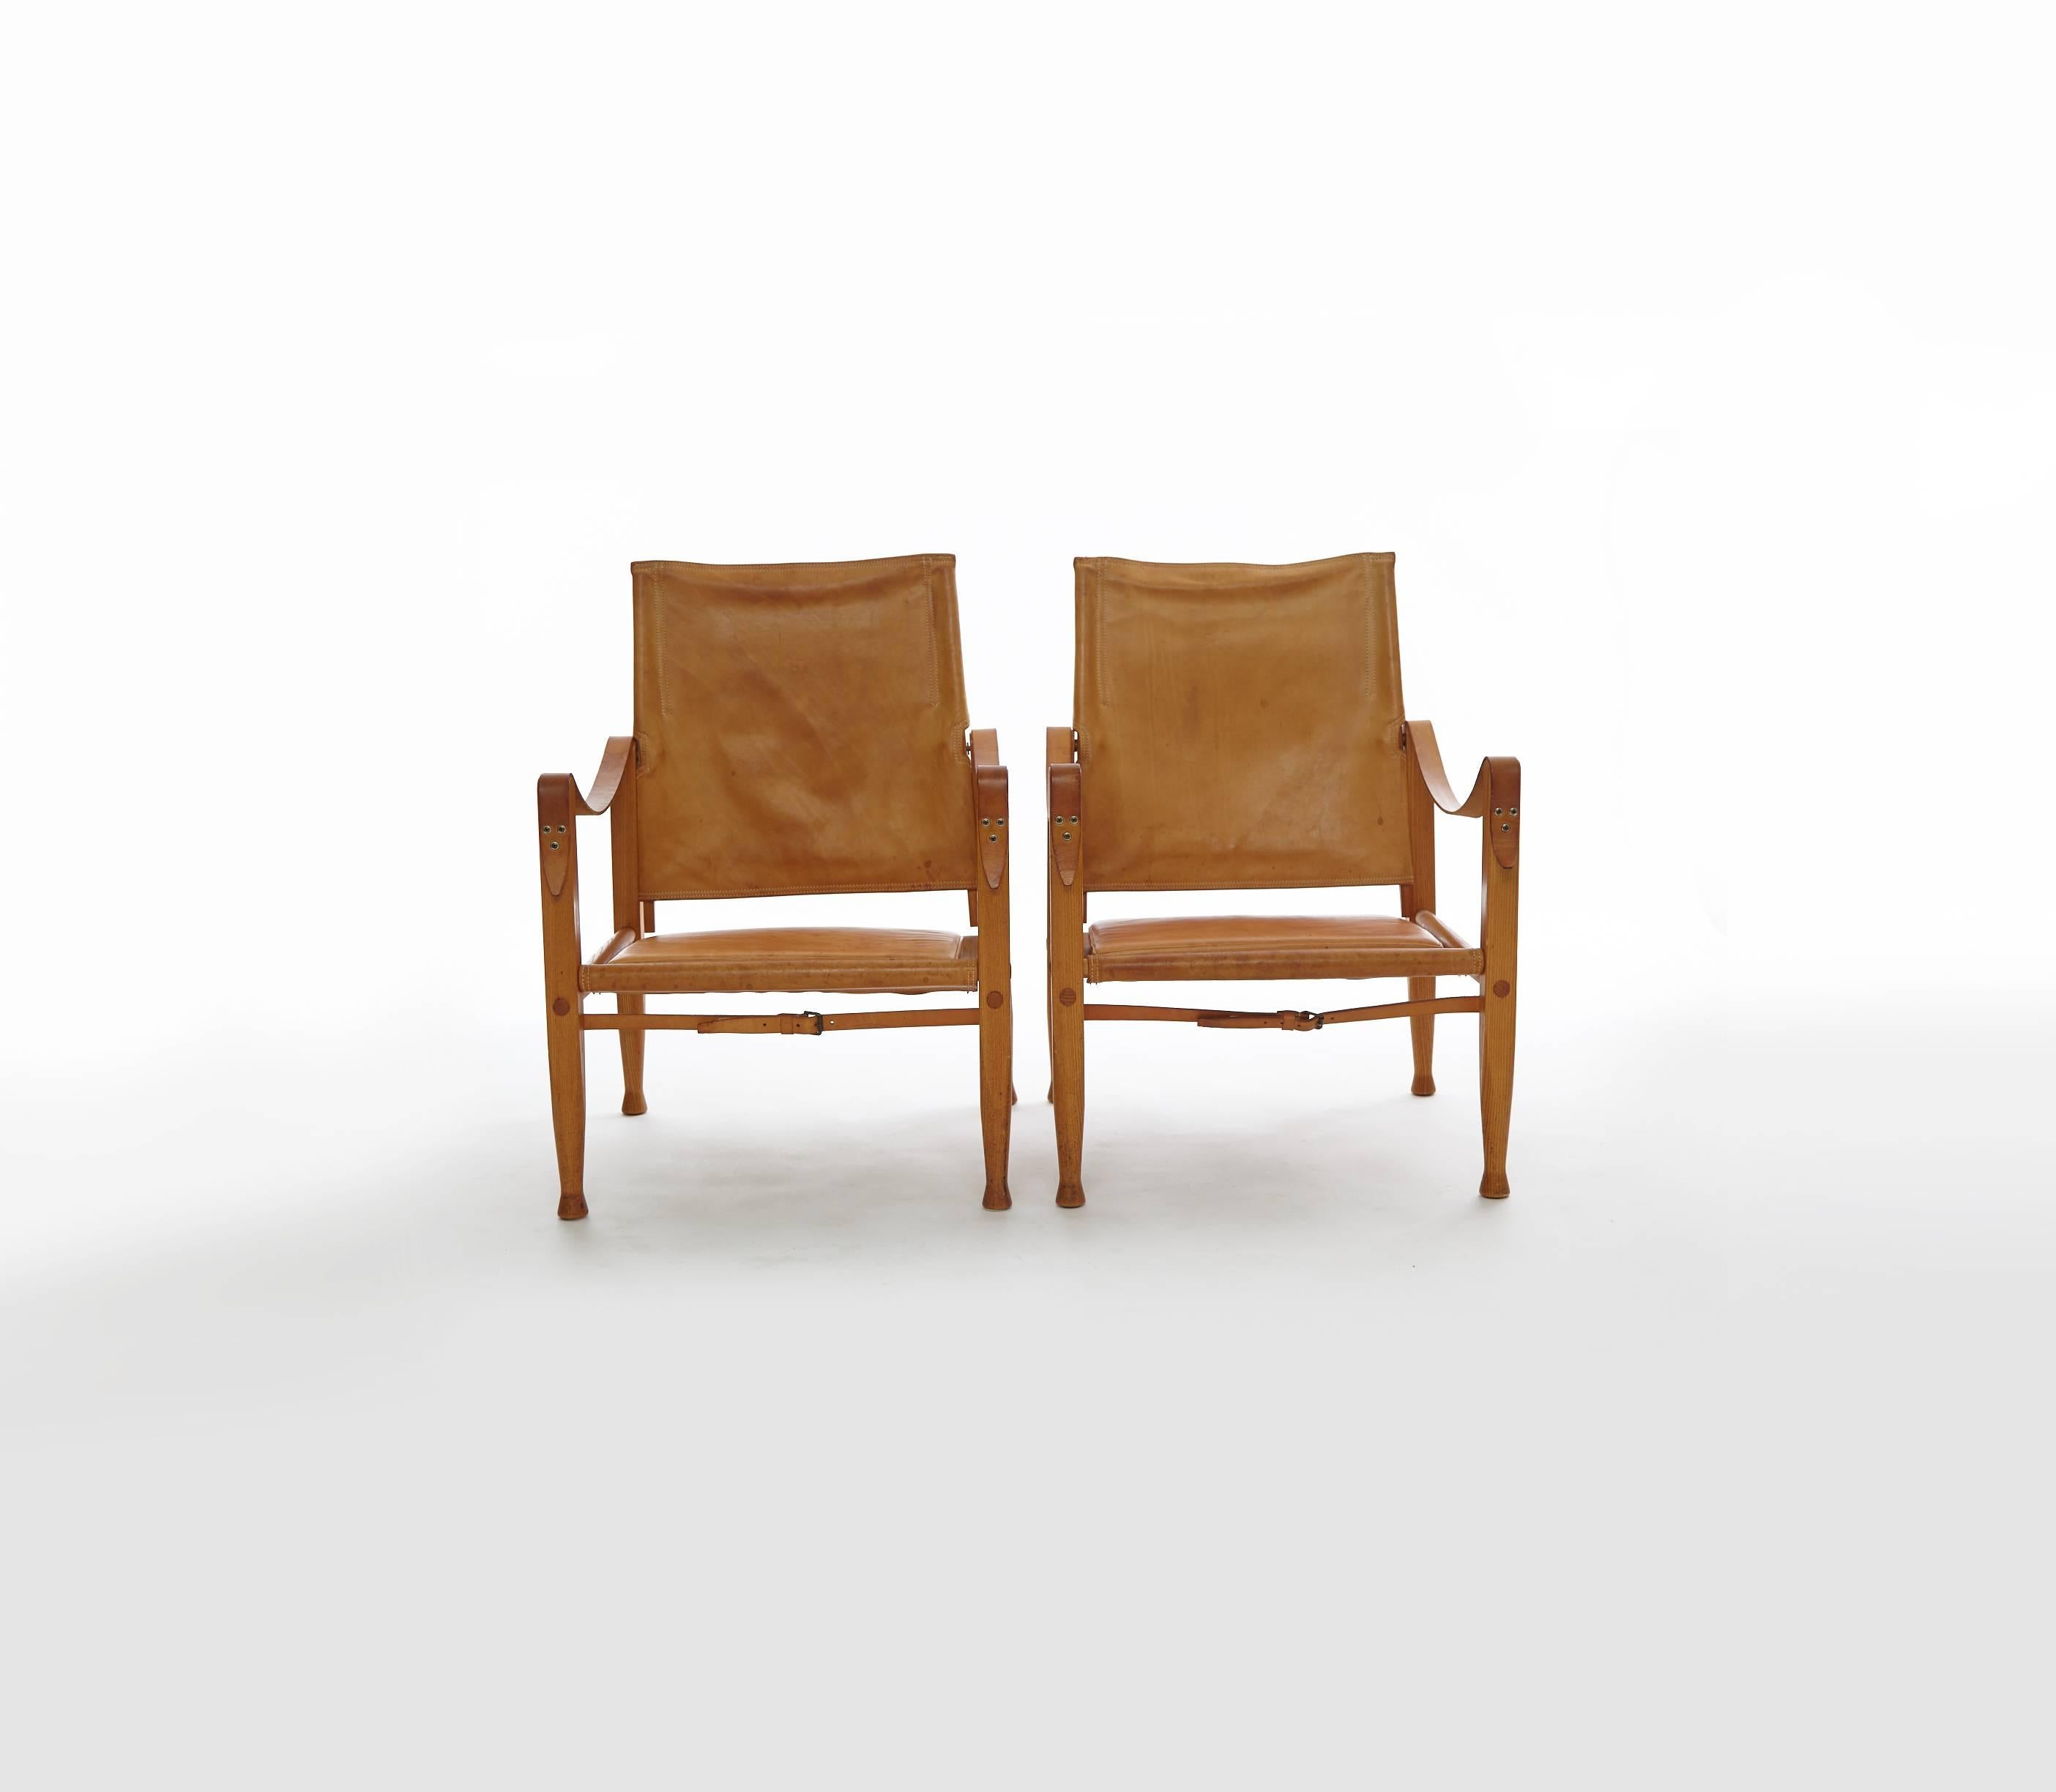 20th Century Pair of Kaare Klint Safari Chairs in Tan Leather, Made by Rud Rasmussen, Denmark